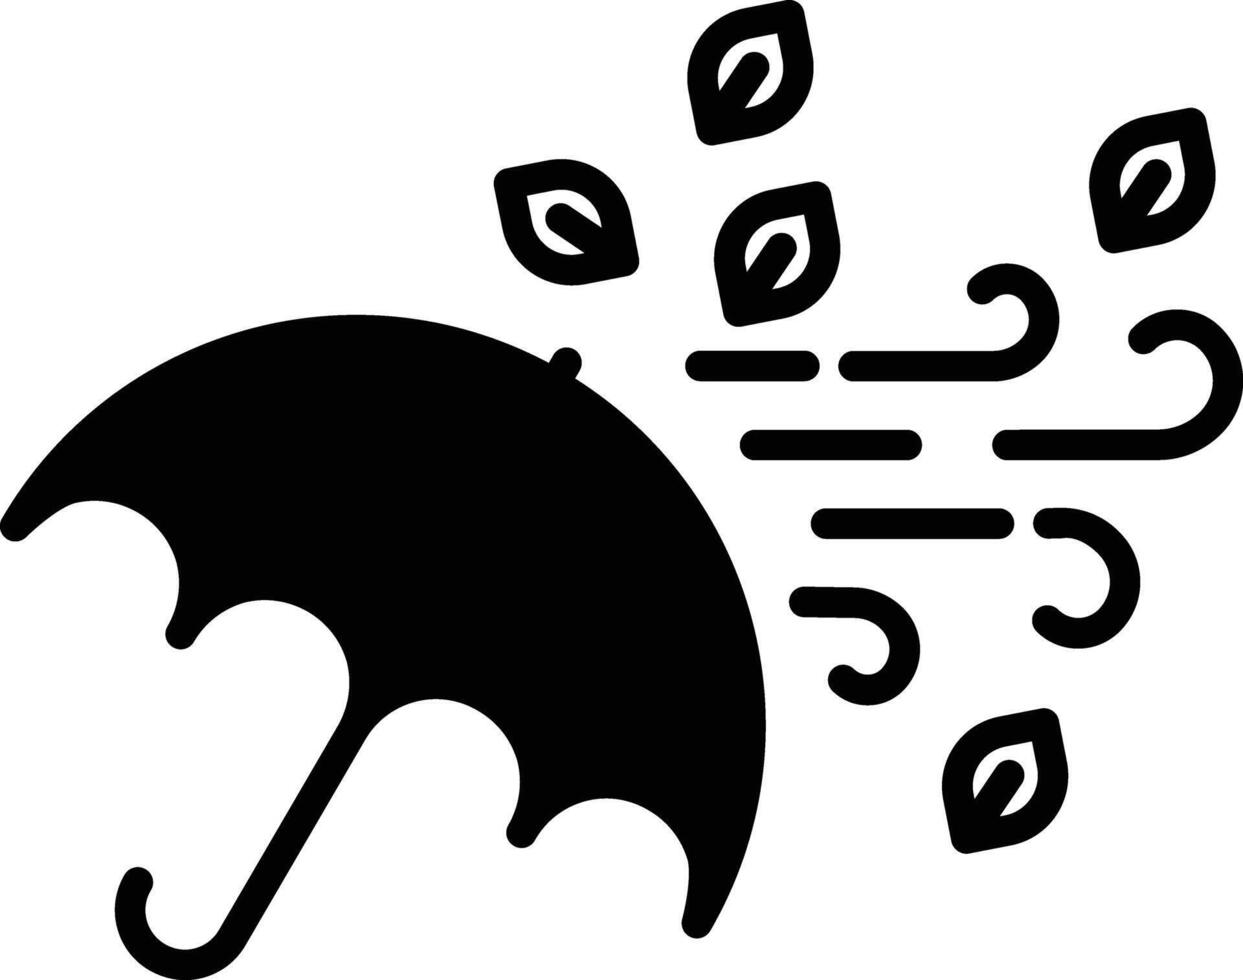 Umbrella wind glyph and line vector illustration